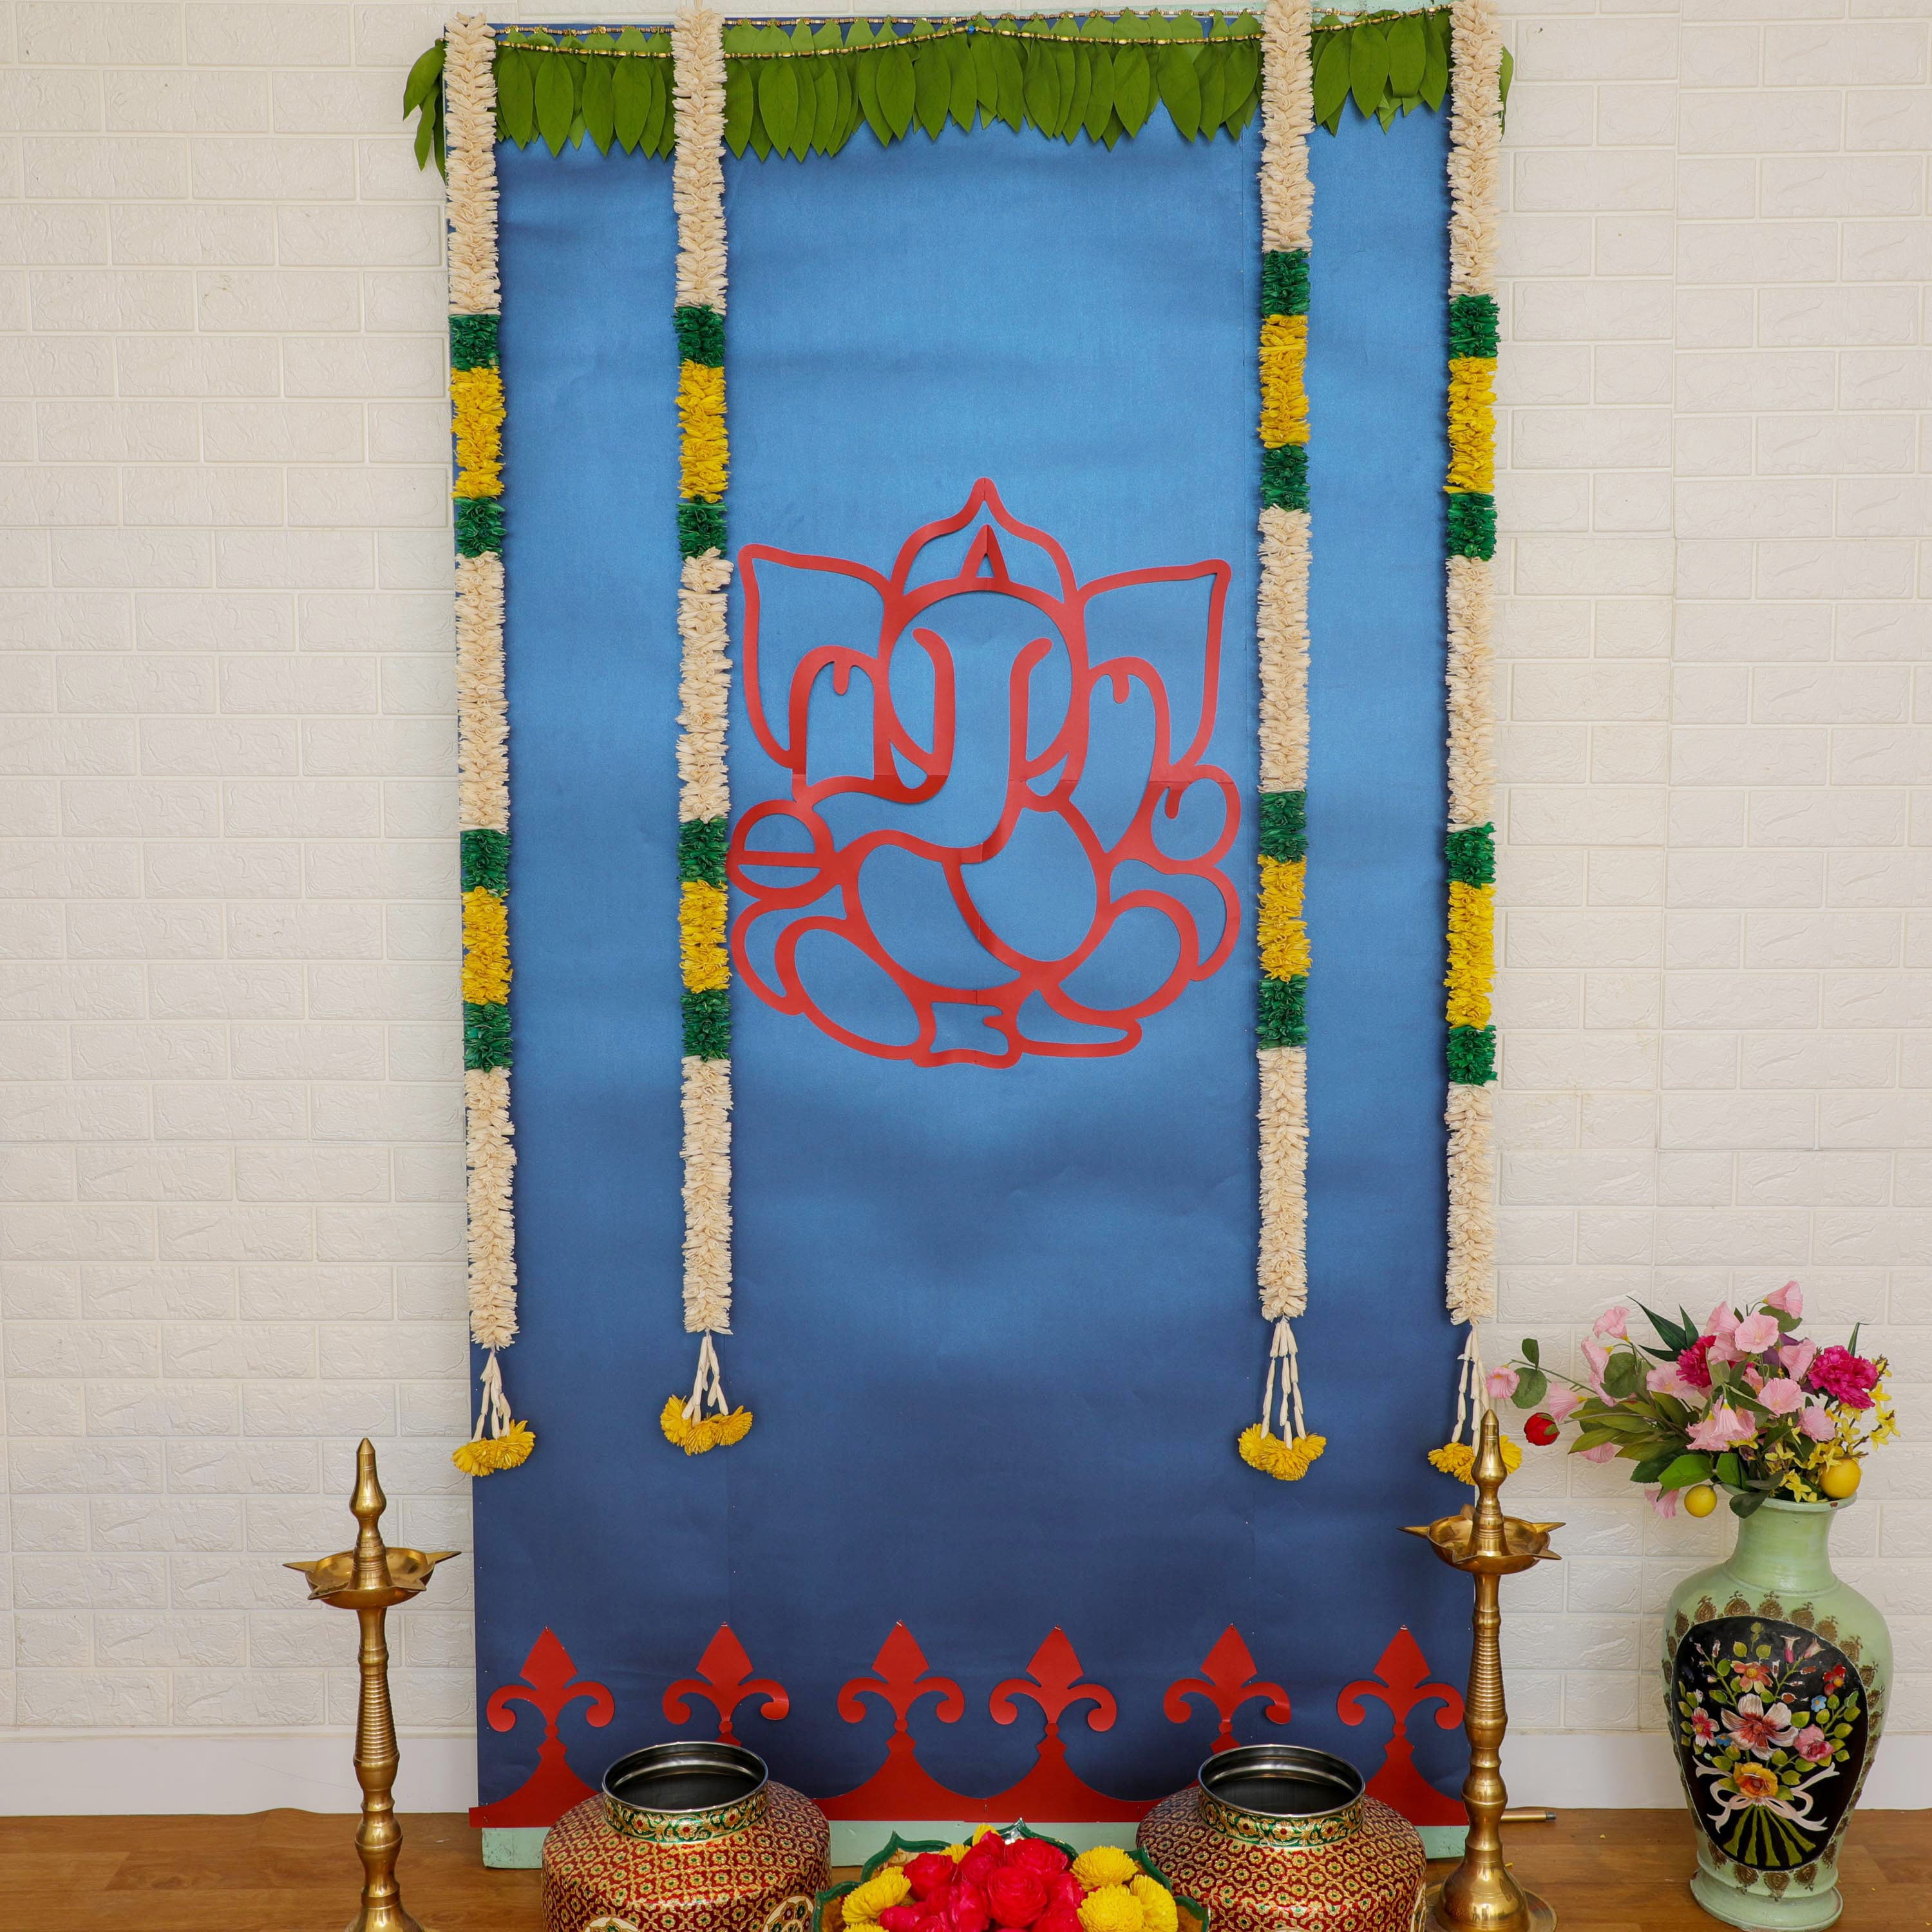 Ganesha Backdrop Kit for Indian Pooja Rituals online